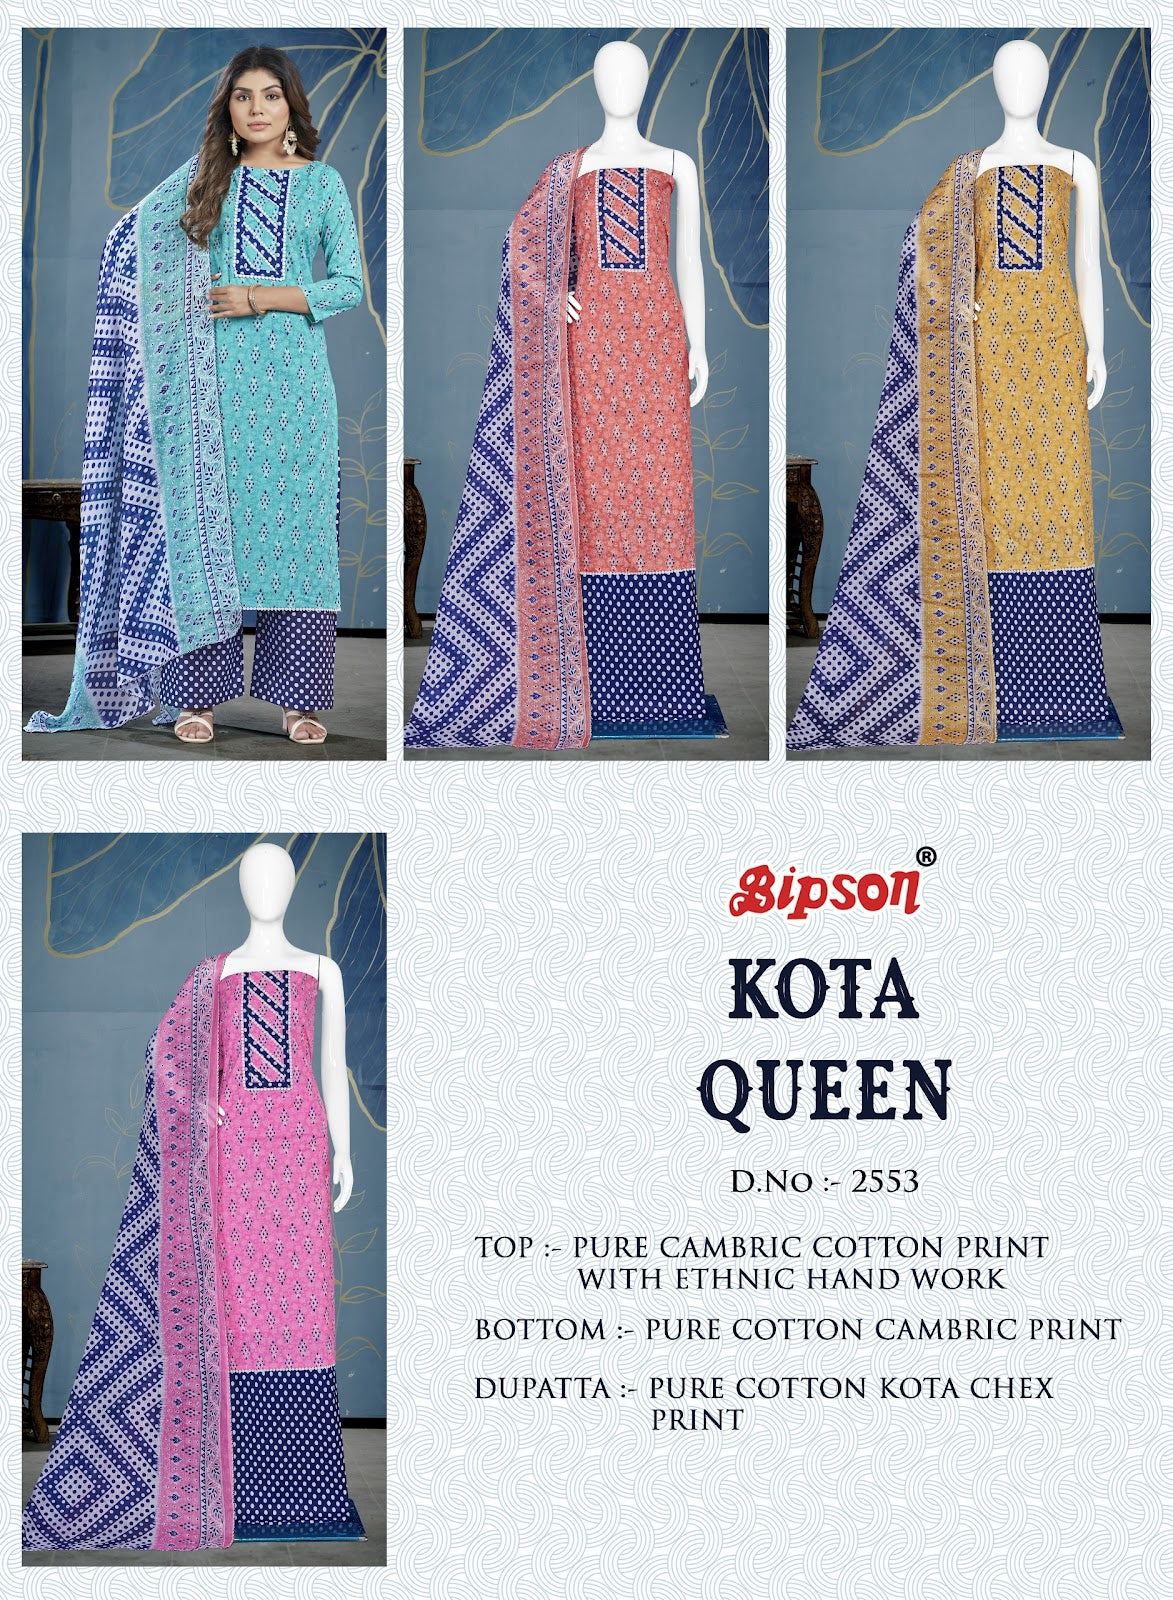 Kota Queen 2553 Bipson Prints Cotton Cambric Pant Style Suits